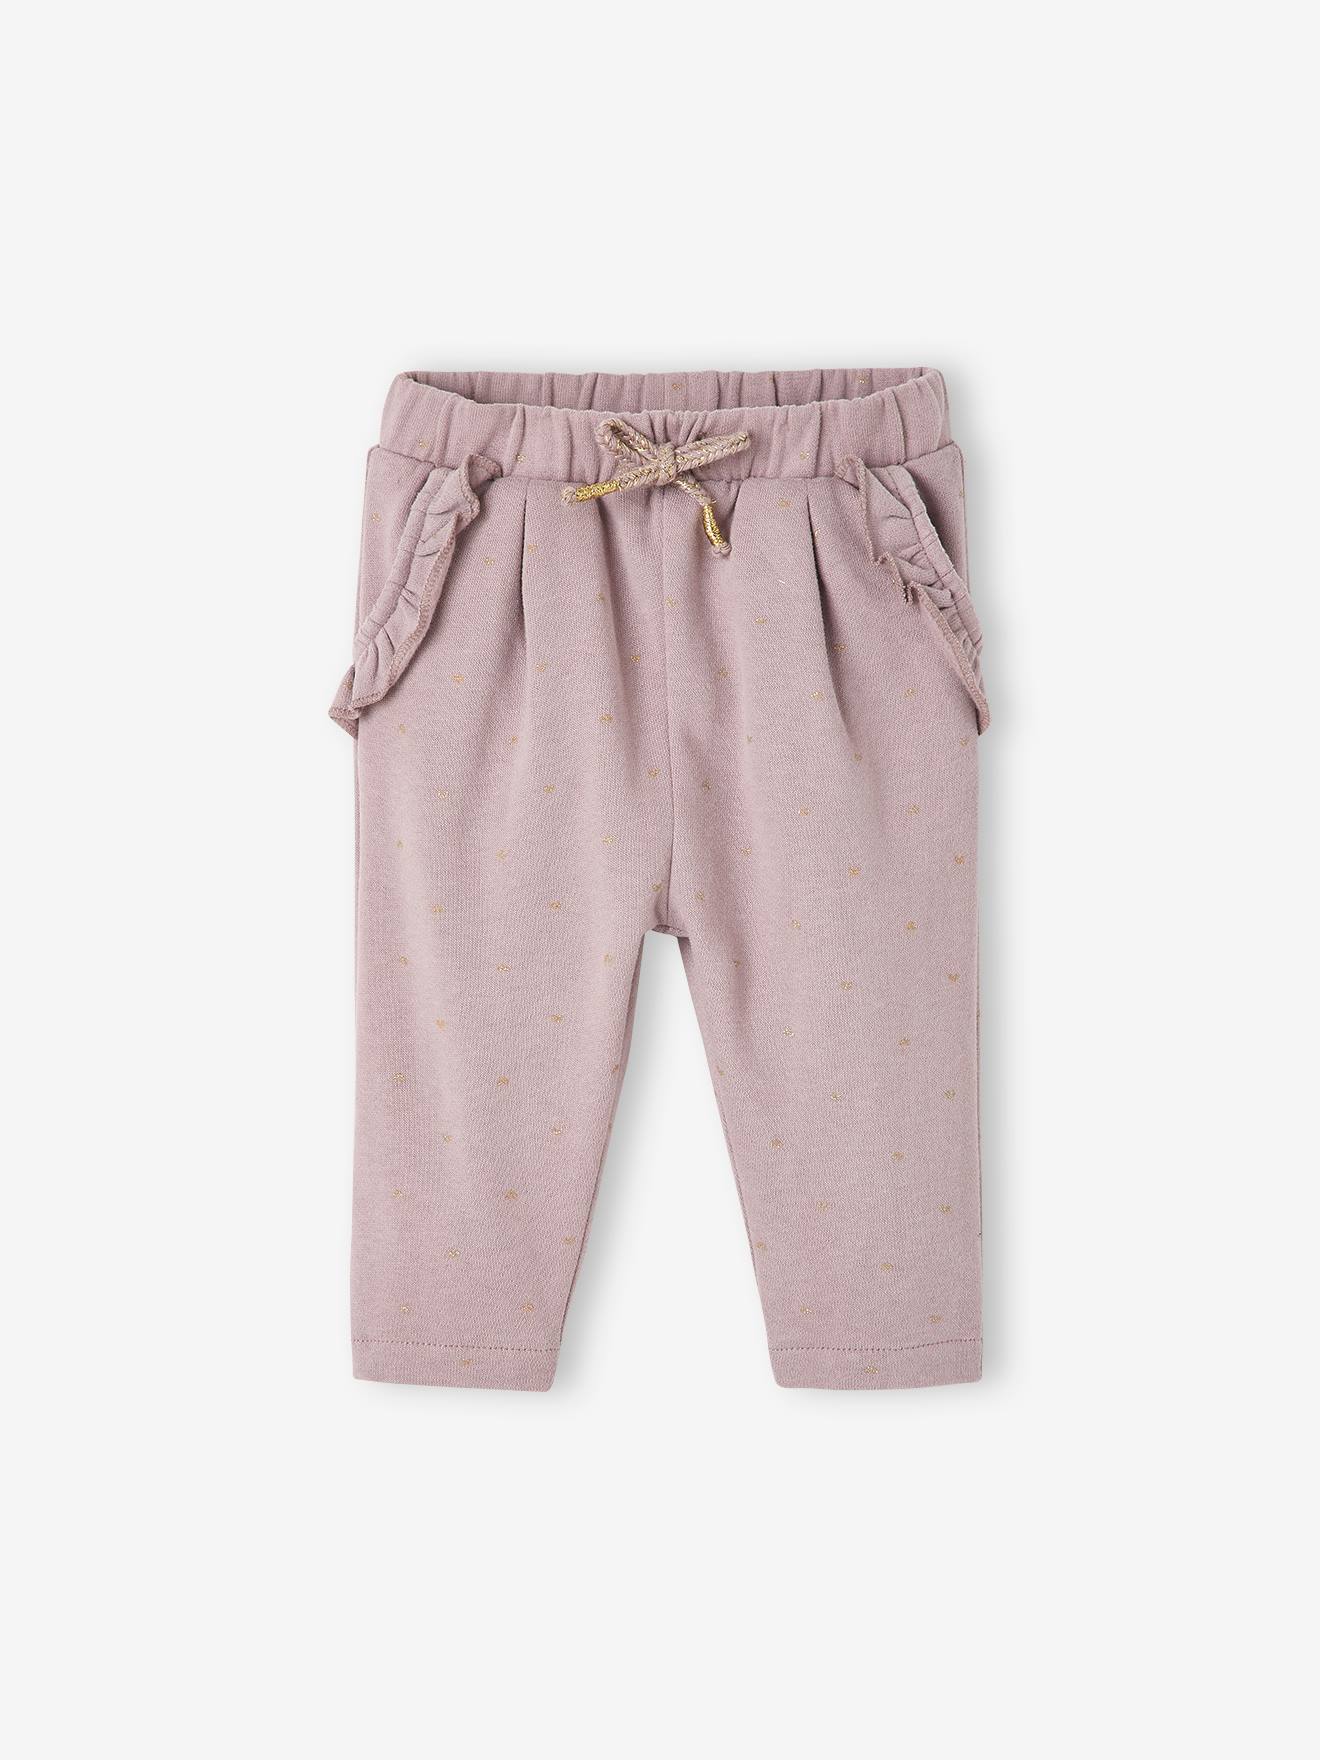 KIDS FASHION Trousers Print Brown 4Y discount 83% Mc baby slacks 